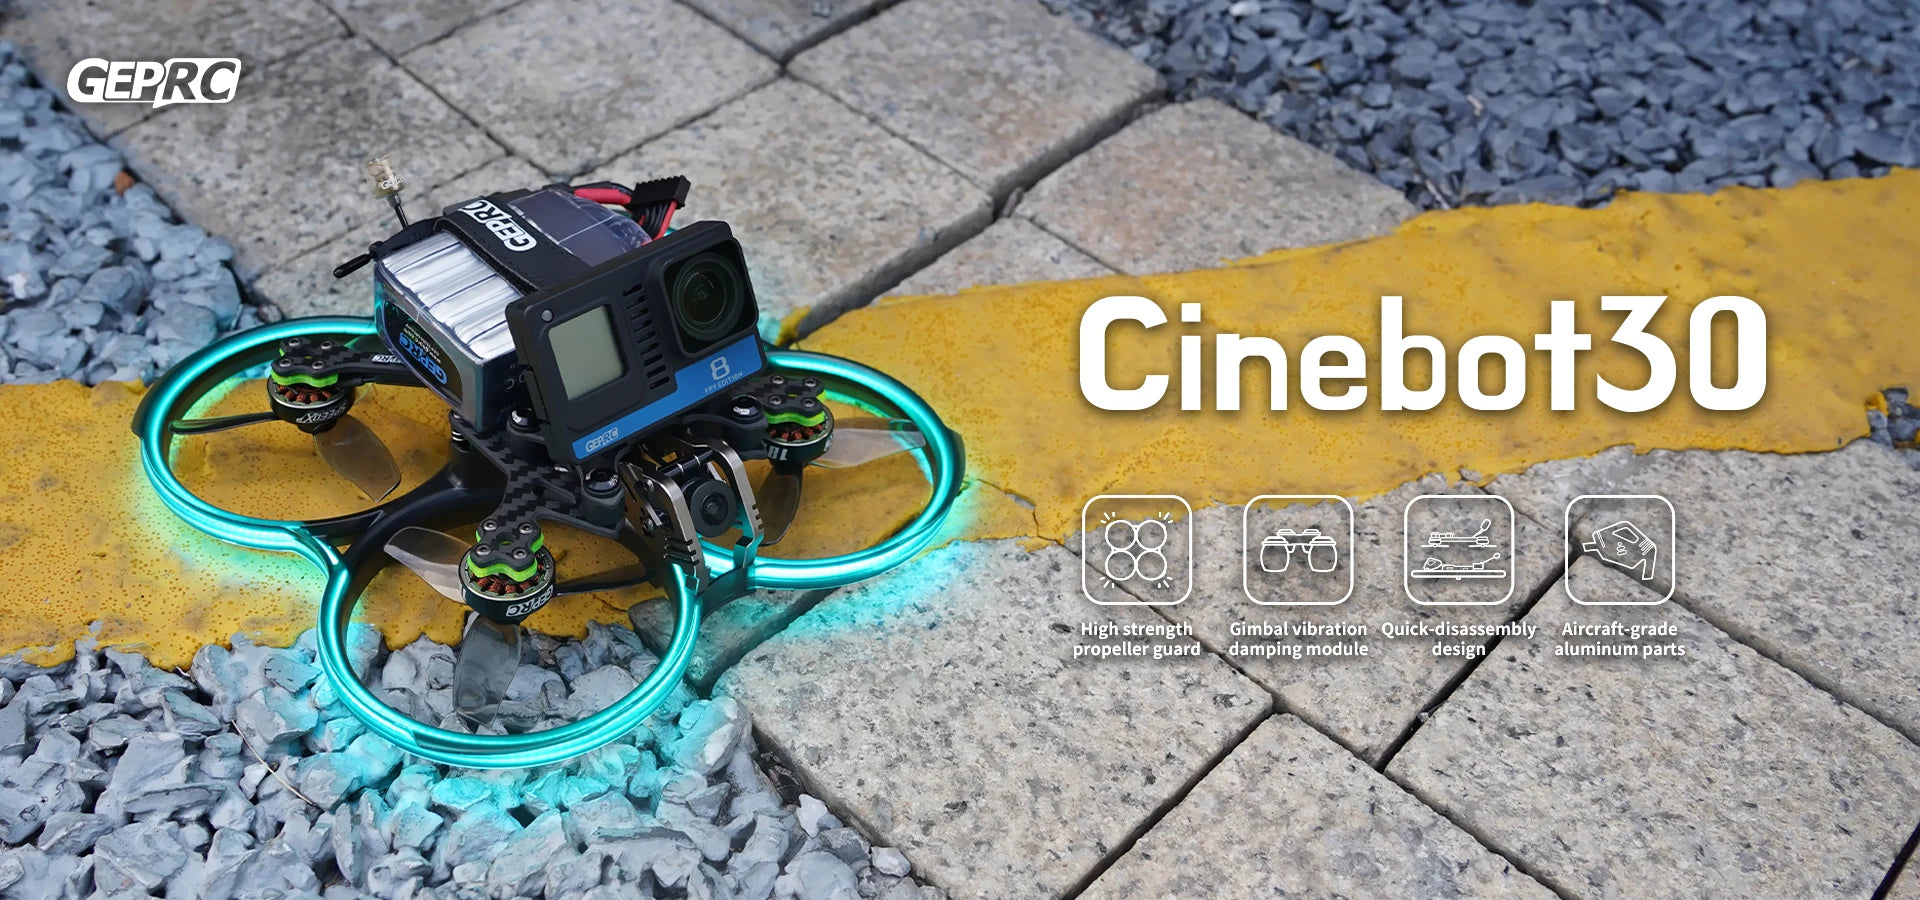 GEPRC Cinebot30 HD - Walksnail Avatar FPV, GEPRC Cinebot30 HD, GEPRC 8 Cinebot3o High strength Gimbal vibration: Quick-dis